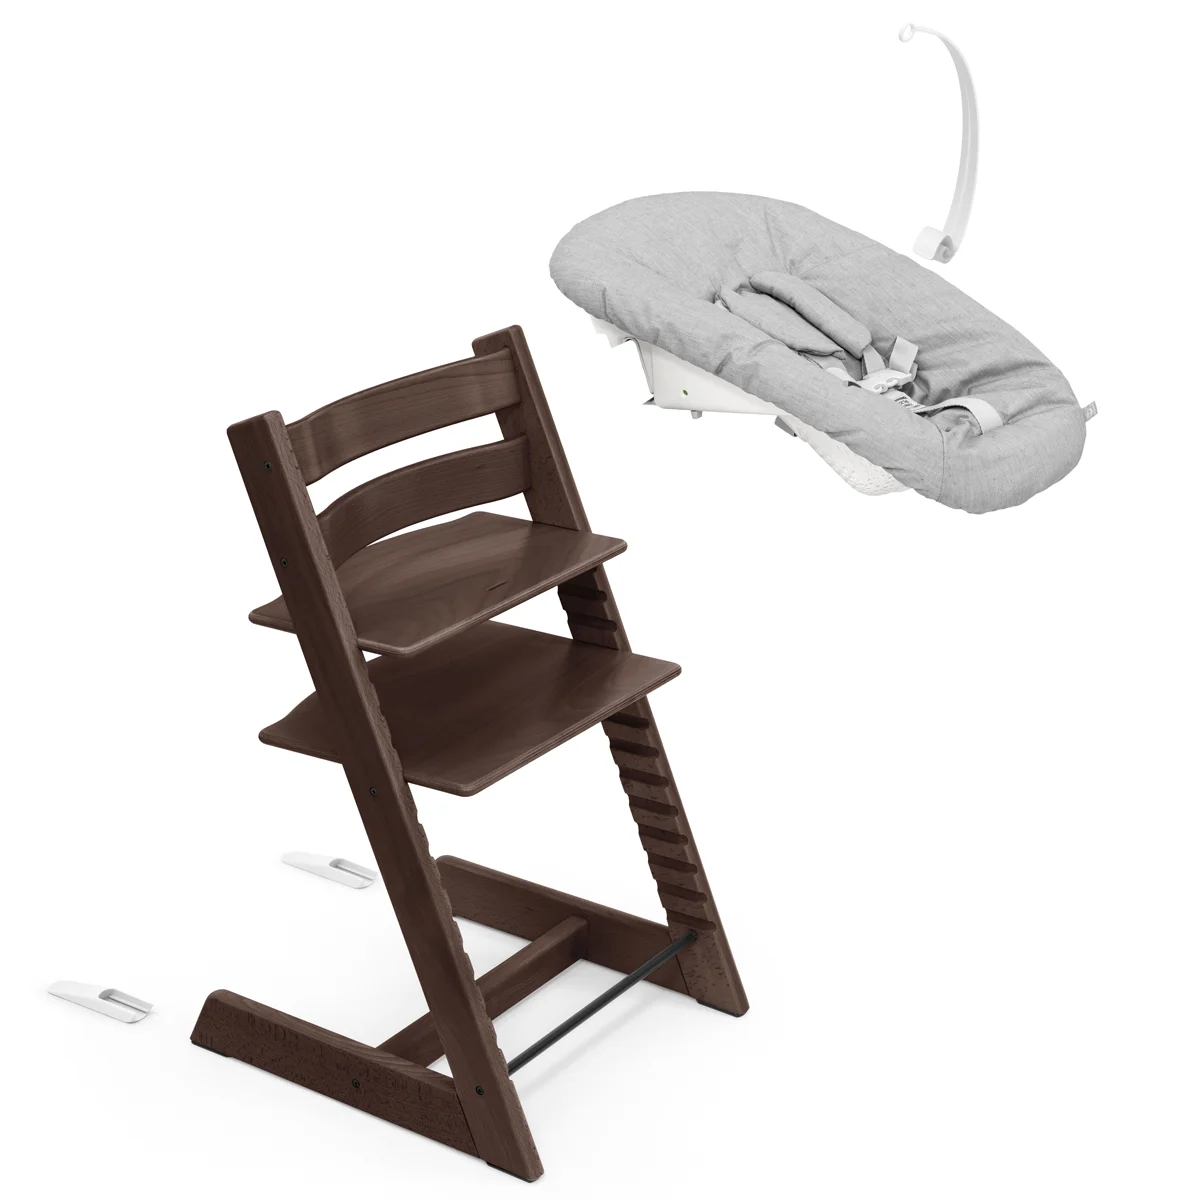 Набор Stokke Newborn Tripp Trapp Walnut Brown: стульчик и кресло для новорожденных (k.100106.52) - фото 2